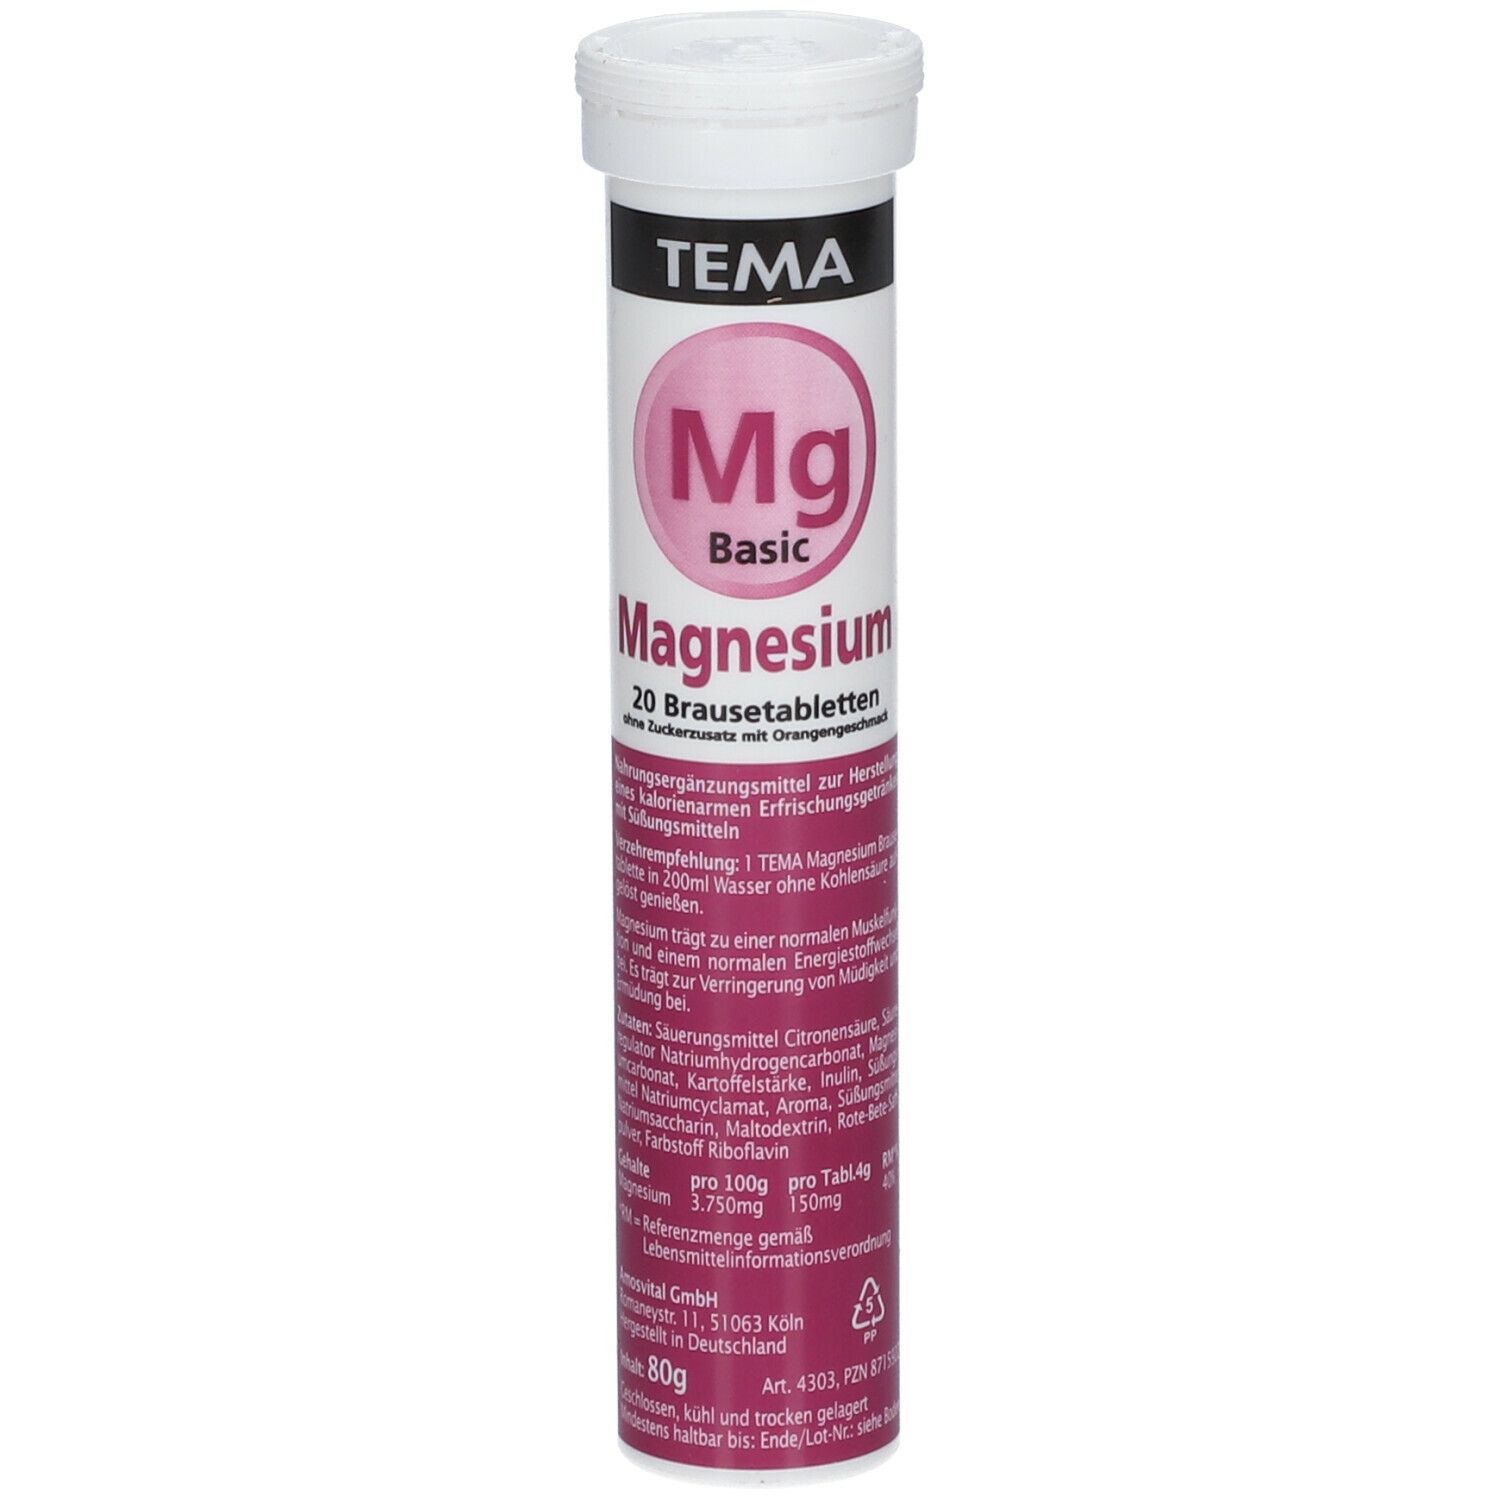 Image of TEMA Magnesium 150mg